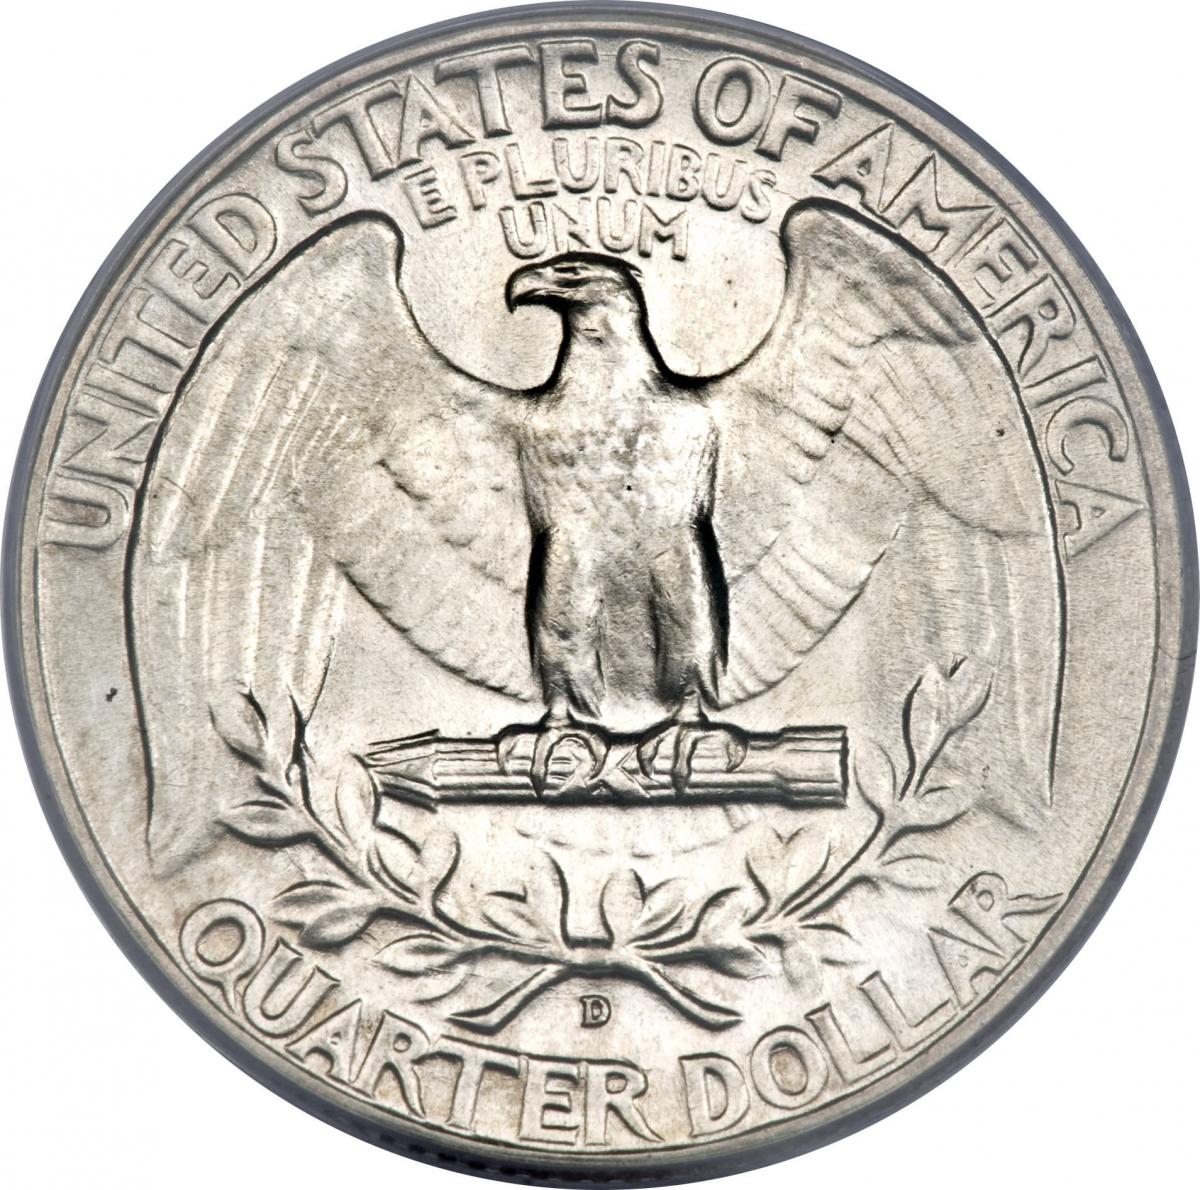 A single eagle quarter against a white background